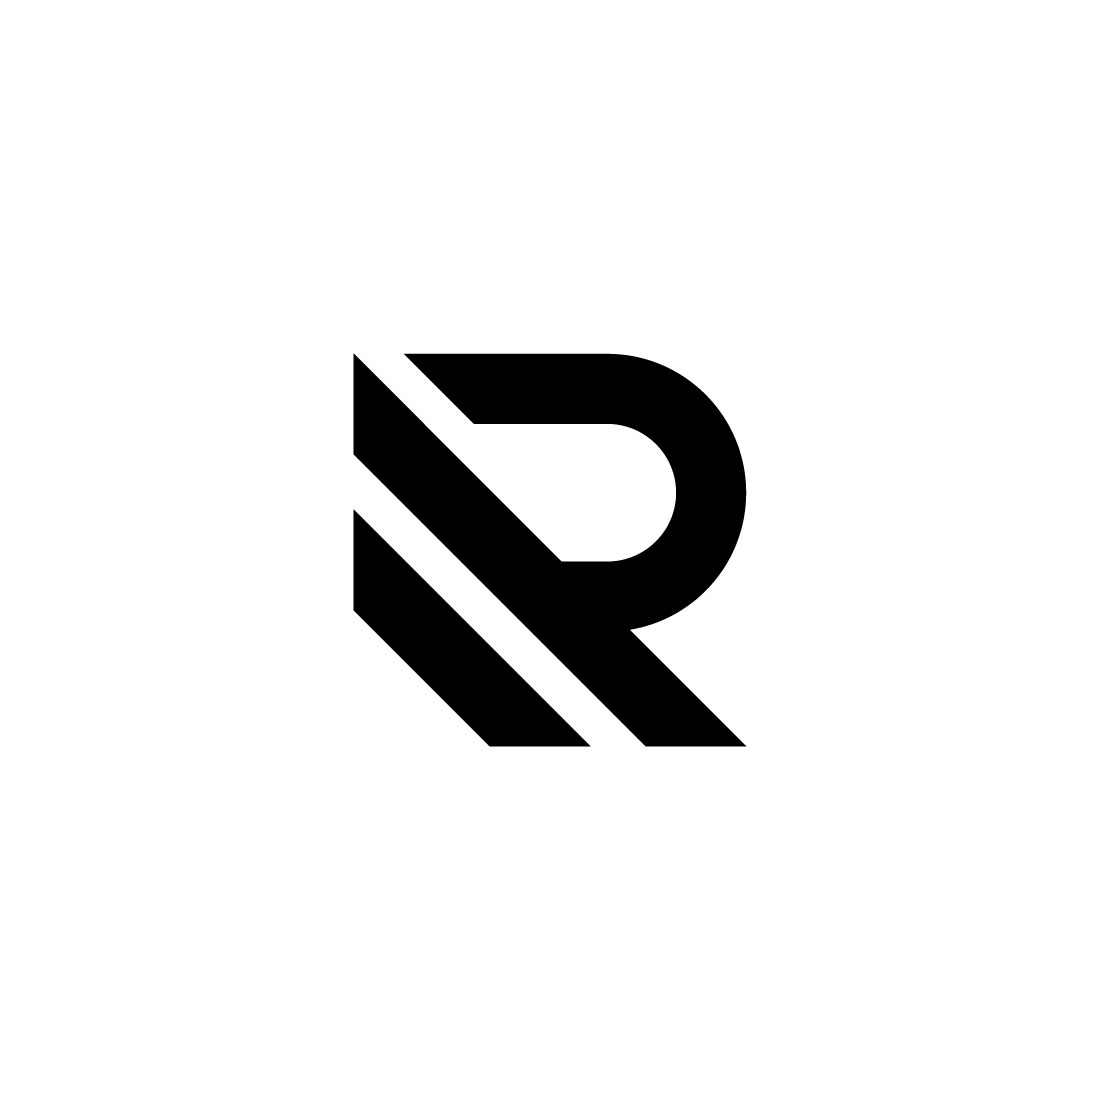 R Logo Design cover image.